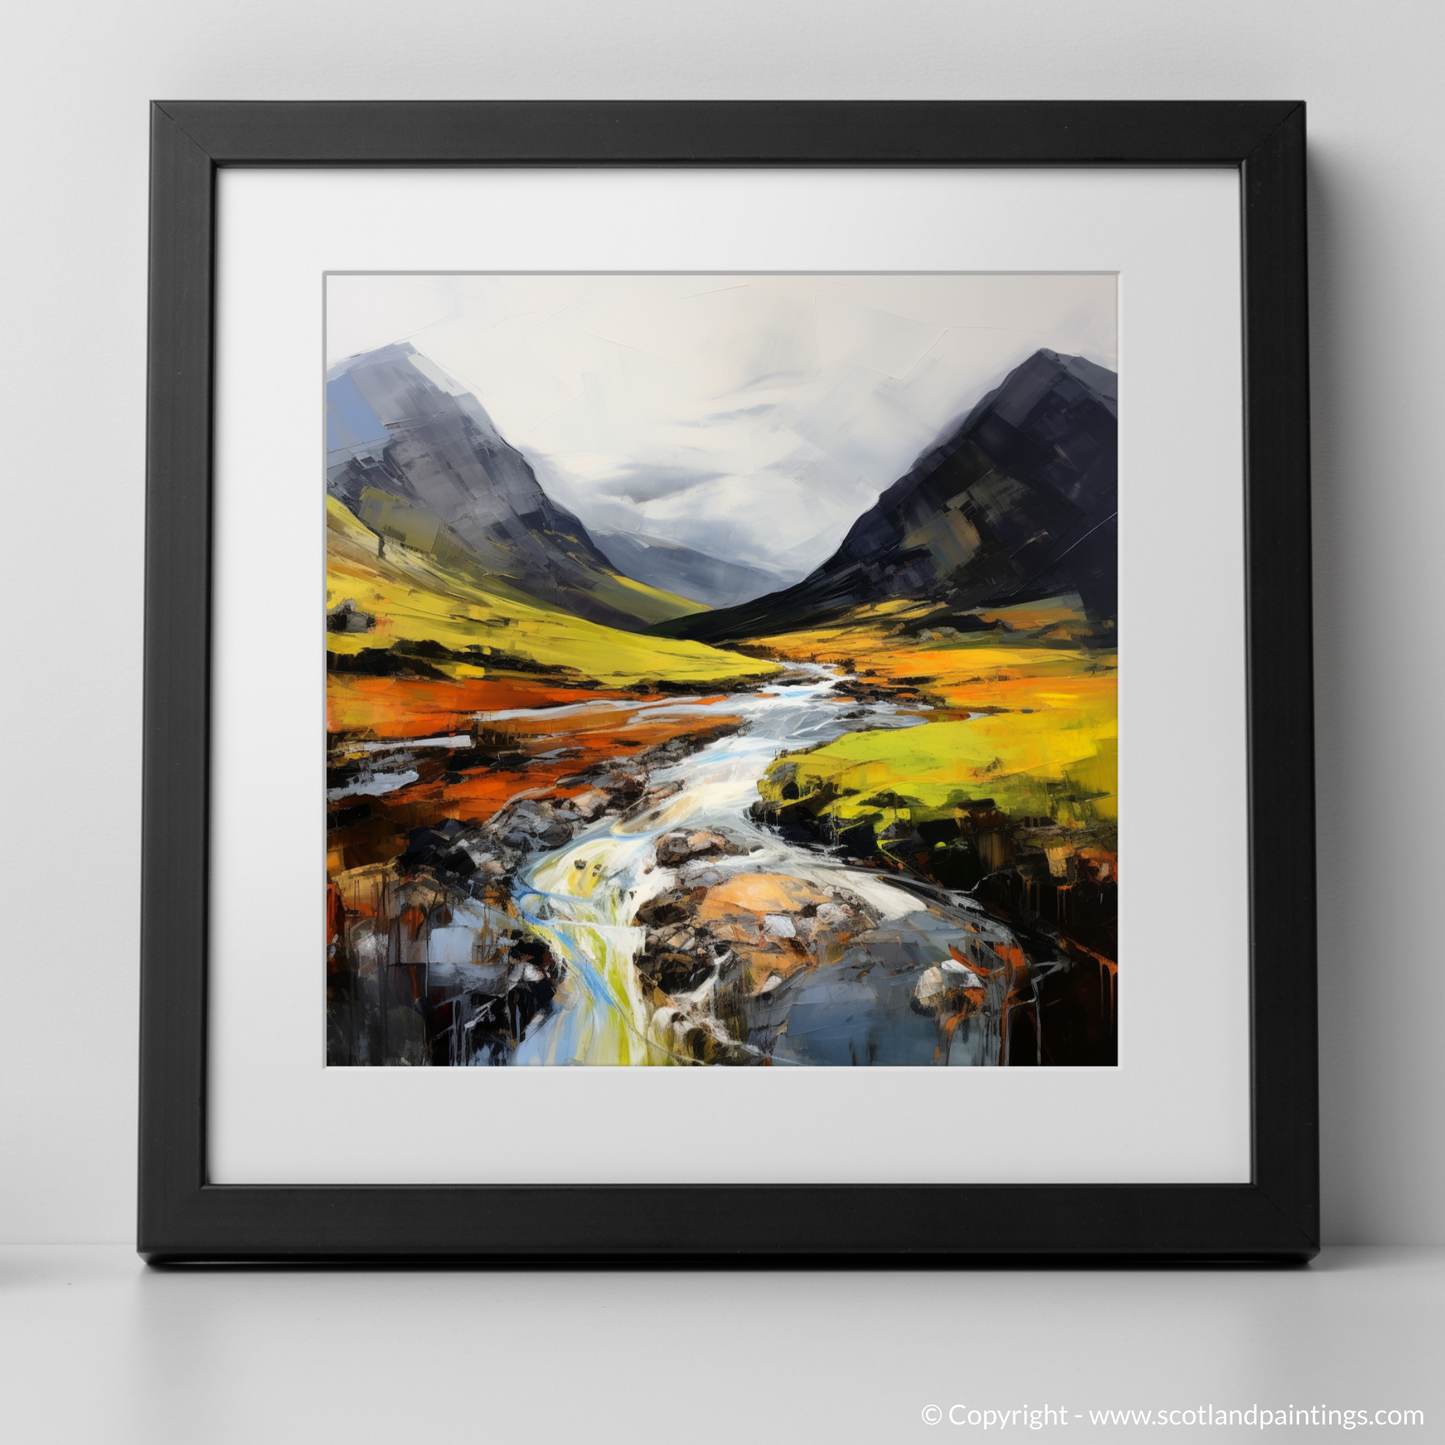 Art Print of Glen Coe, Highlands with a black frame